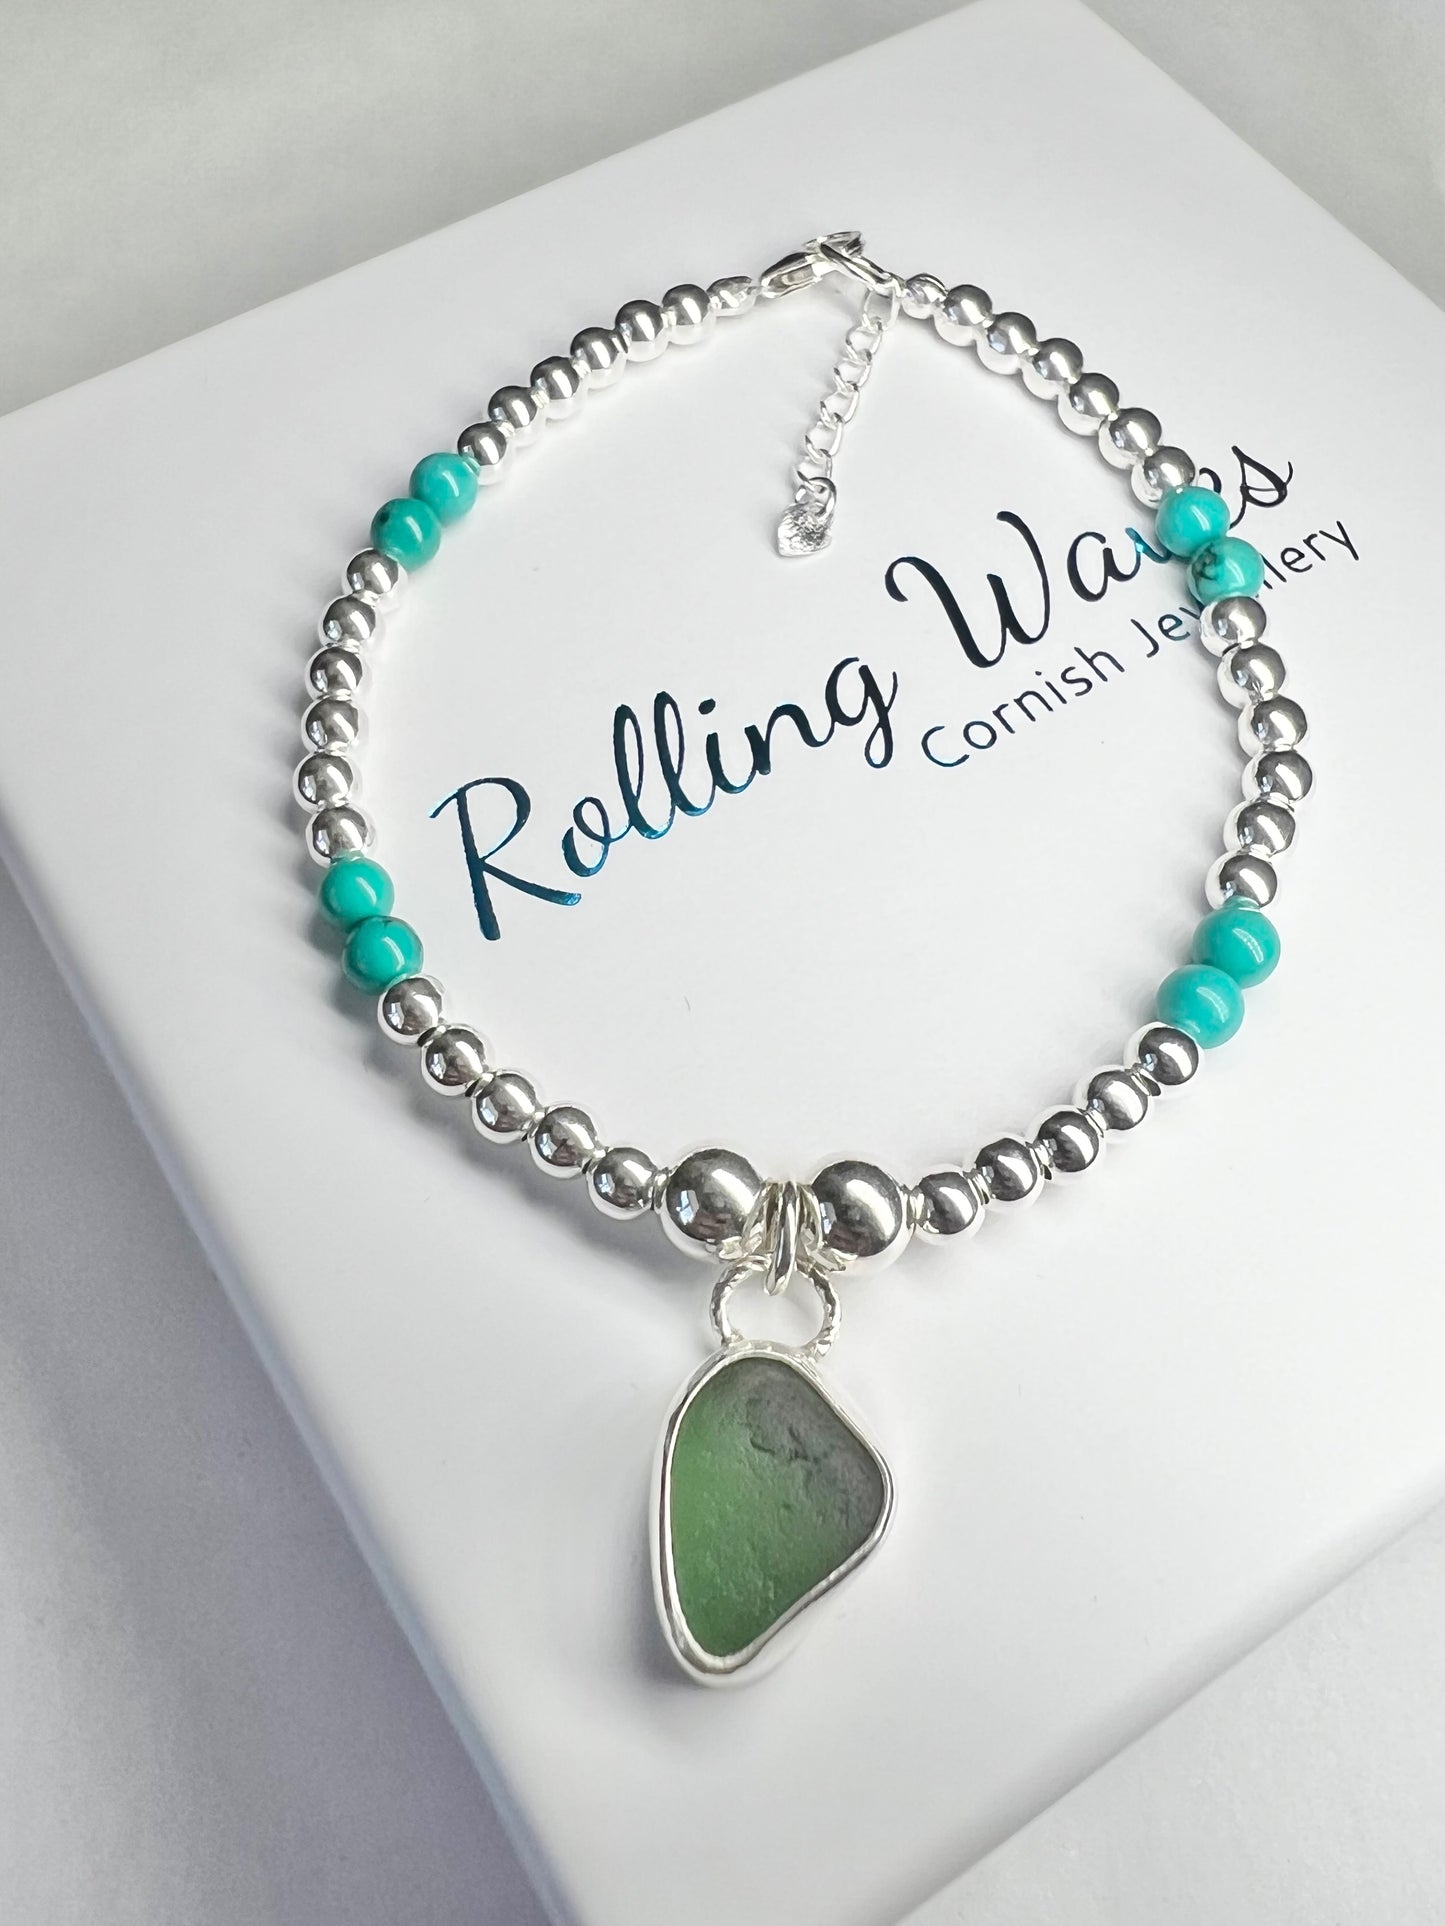 Teal Cornish seaglass & turquoise beaded bracelet